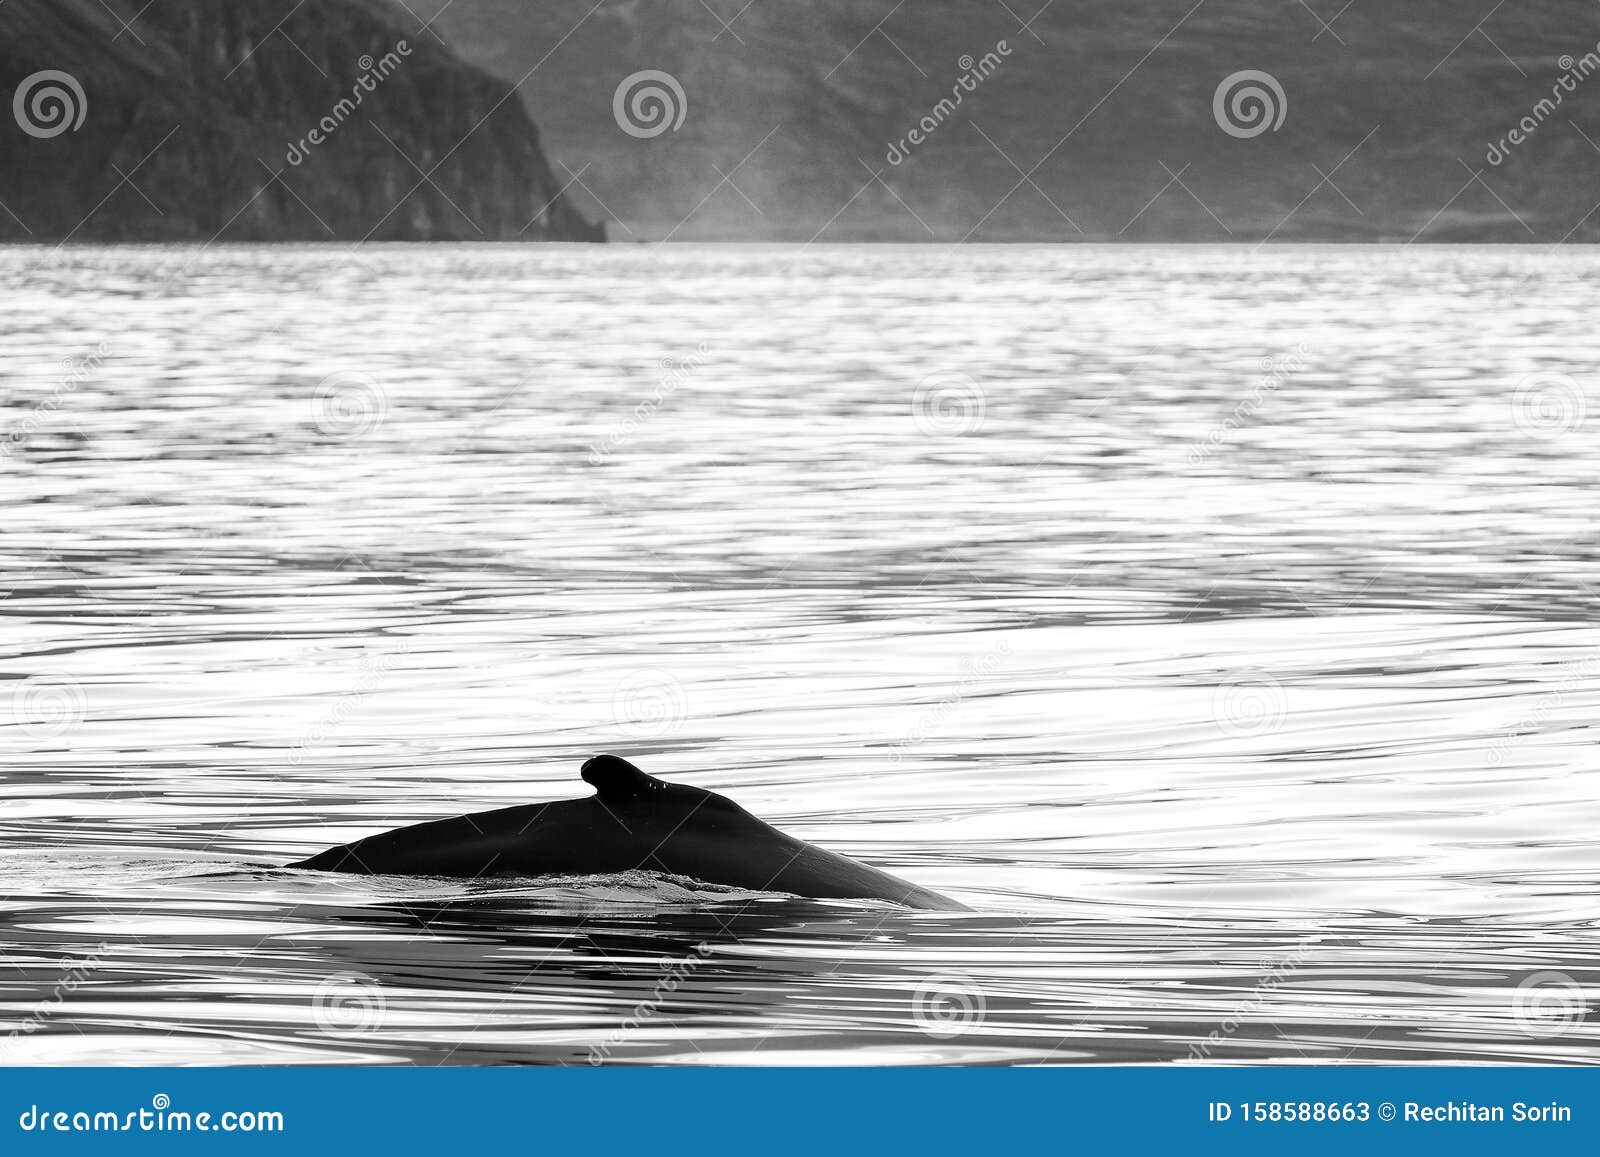 whale watching in skjalfandi bay.